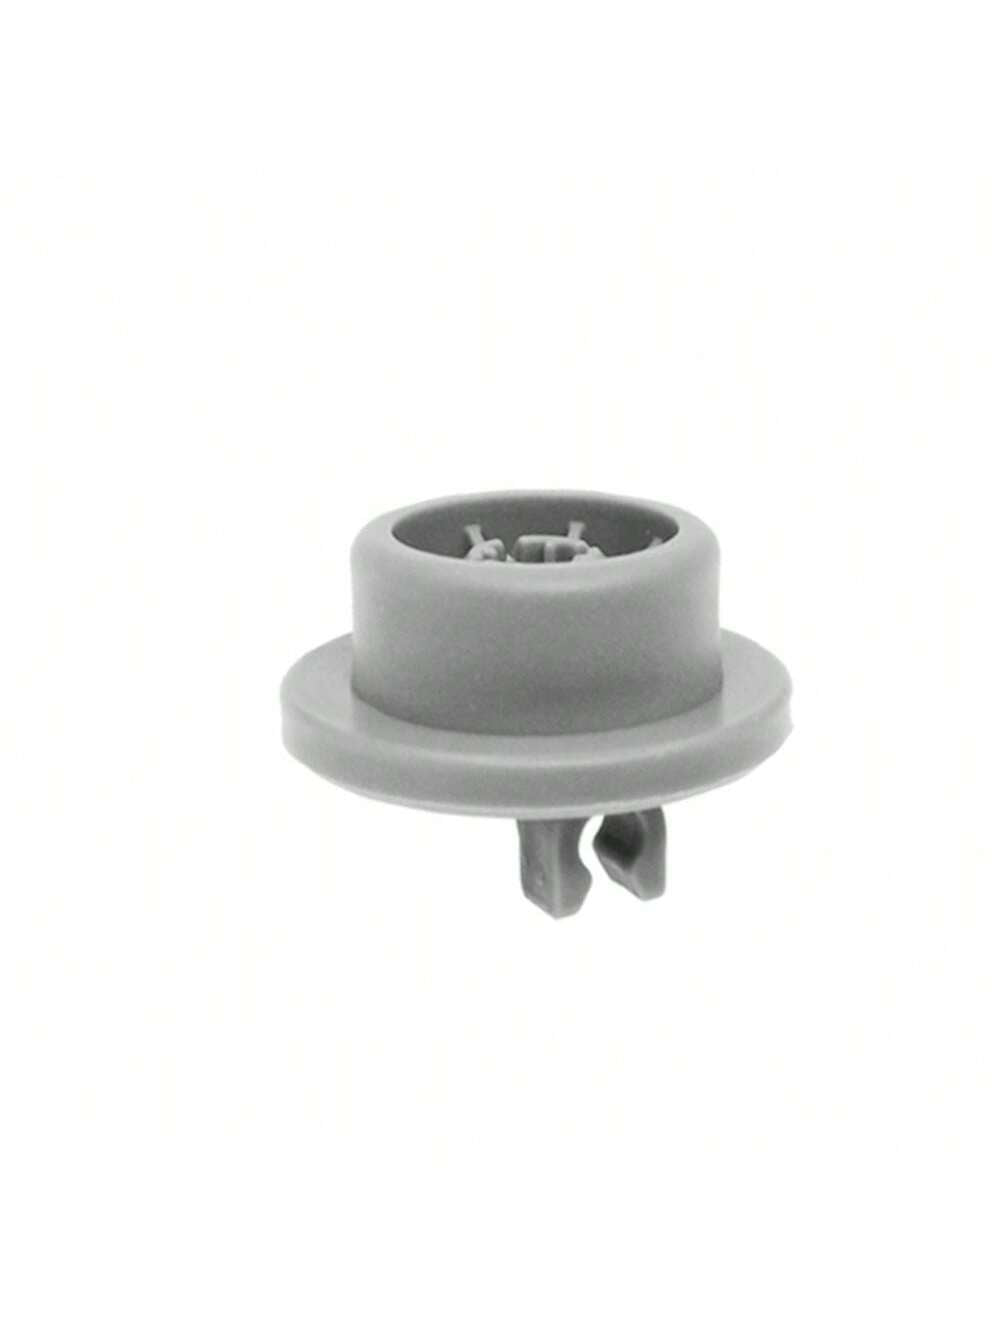 ( 8 Pack )165314 Dishwasher Lower Rack Wheels UPGRADED Fit For Bosch Kenmore Dishwasher 165314 Dishwasher Wheels Replace 420198 AP2802428 PS3439123 423232 EAP3439123 PS8697067 Dishwasher Rack Number-Grey-8